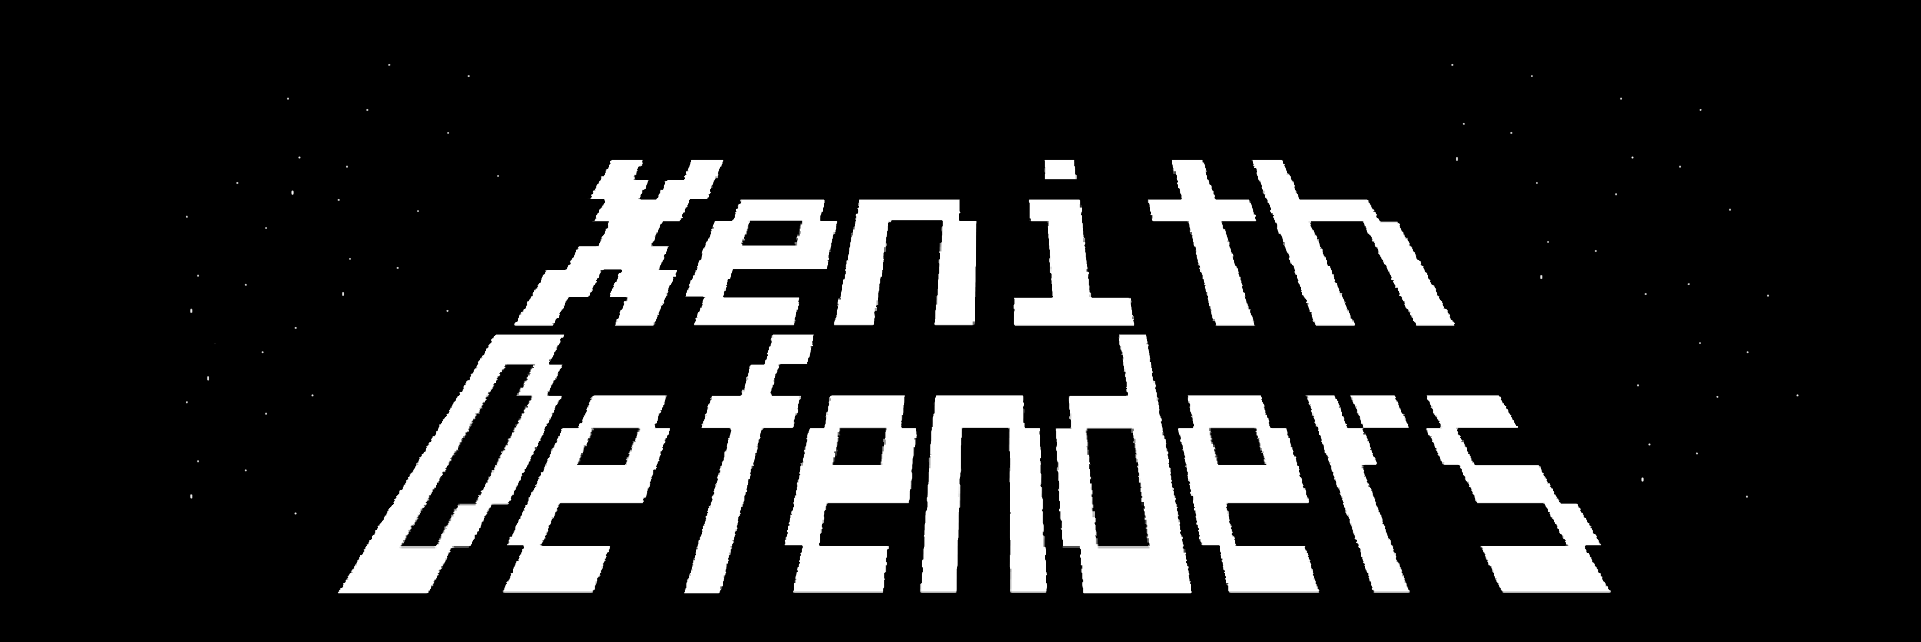 Xenith Defenders